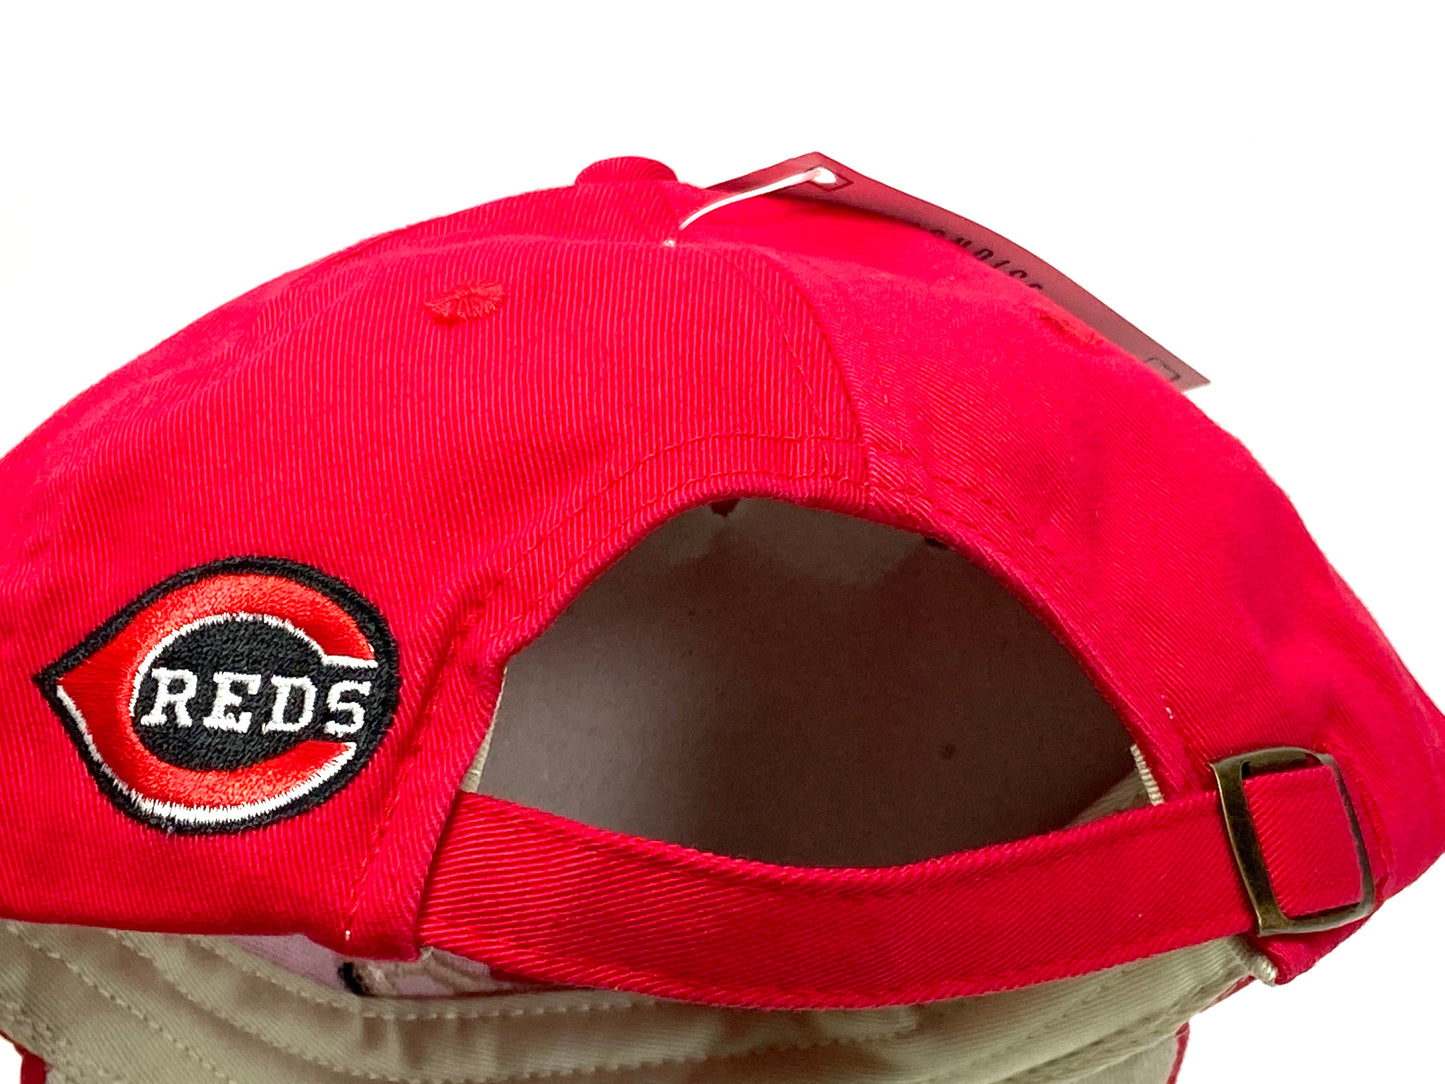 Cincinnati Reds Vintage MLB Youth Logo "C" Cap By Drew Pearson Marketing